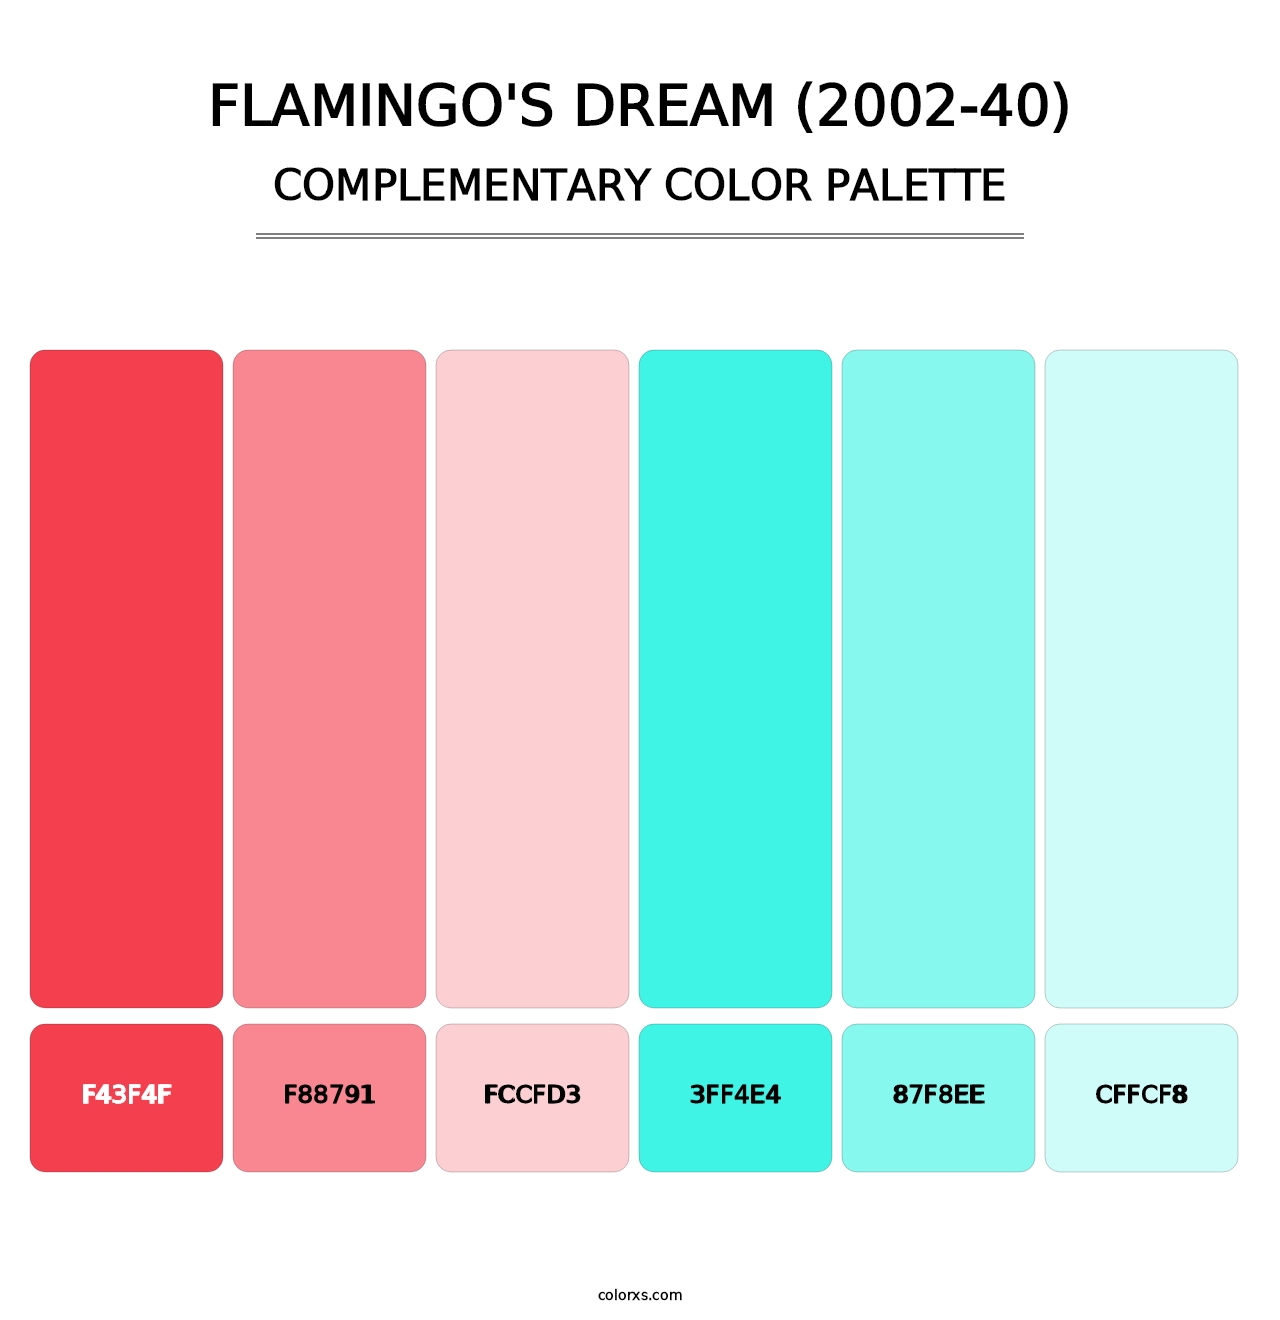 Flamingo's Dream (2002-40) - Complementary Color Palette